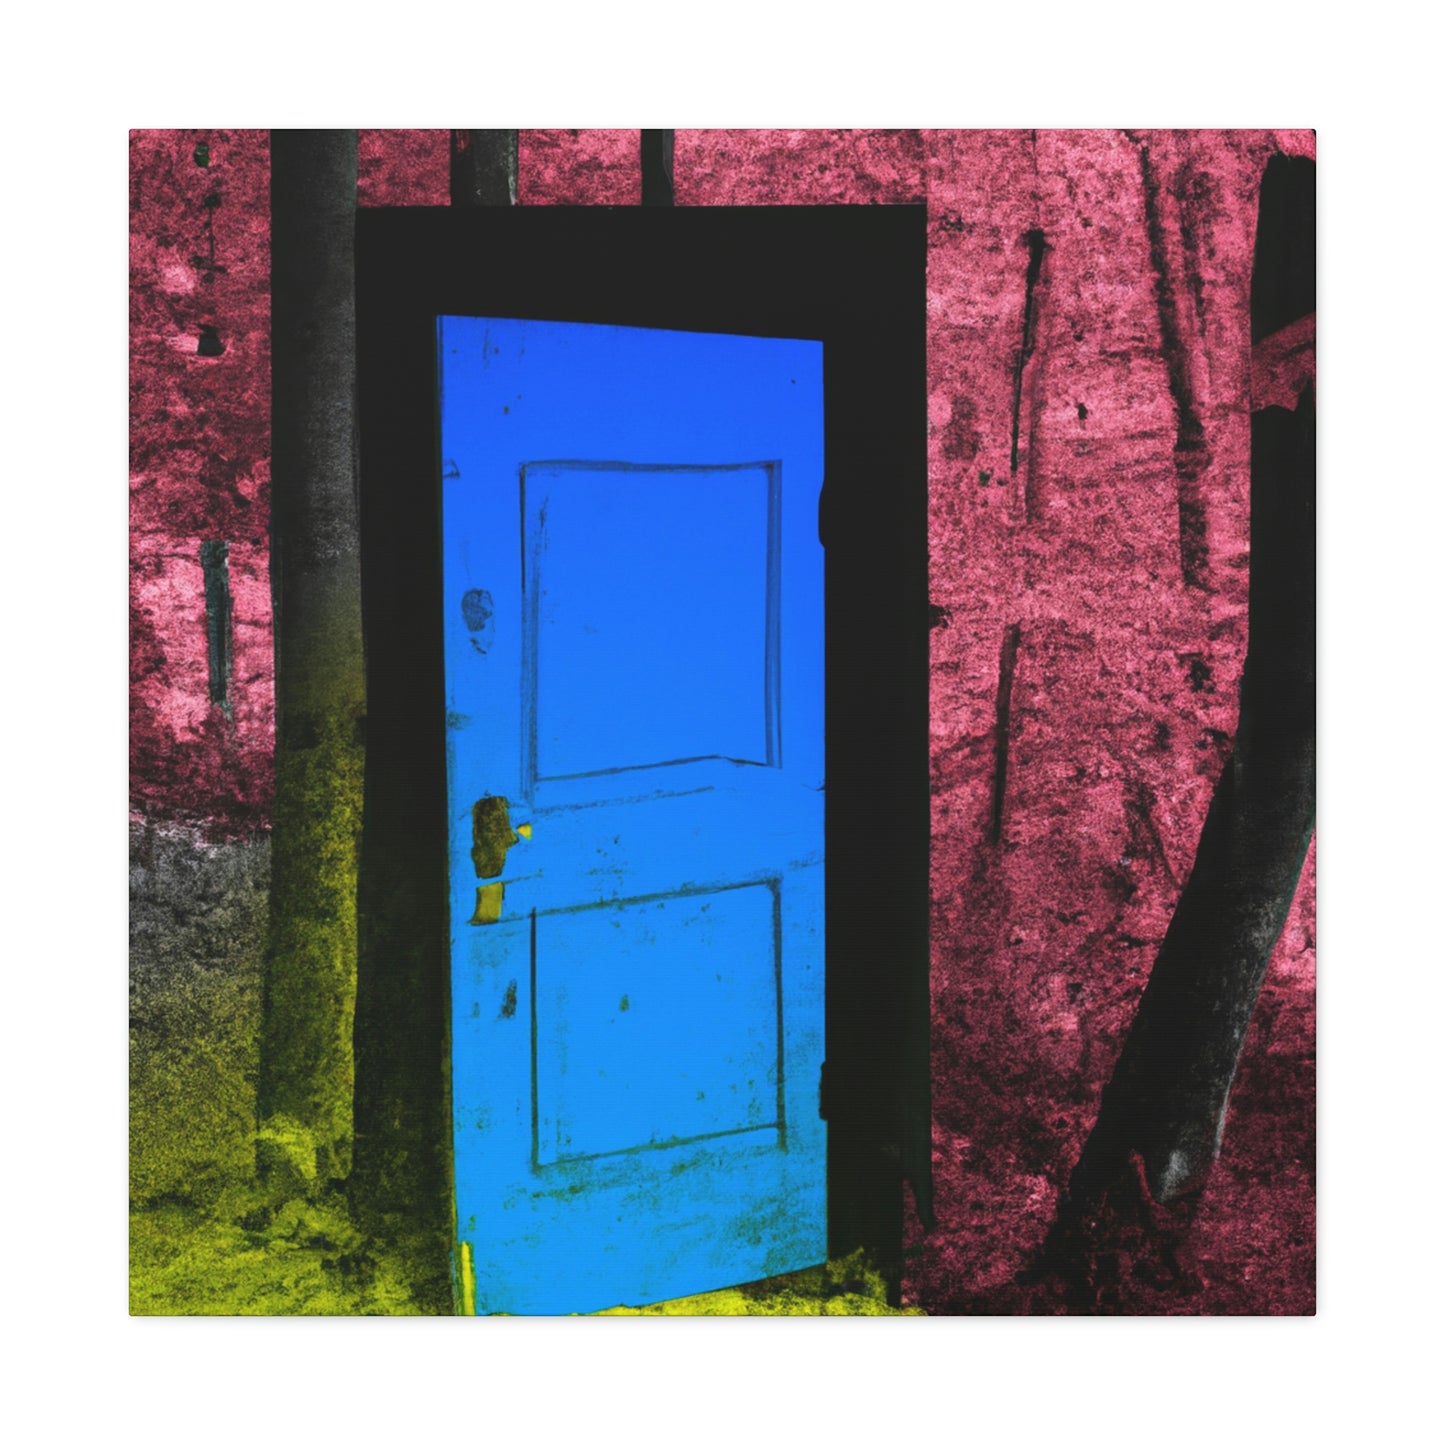 La enigmática puerta del bosque - The Alien Canva